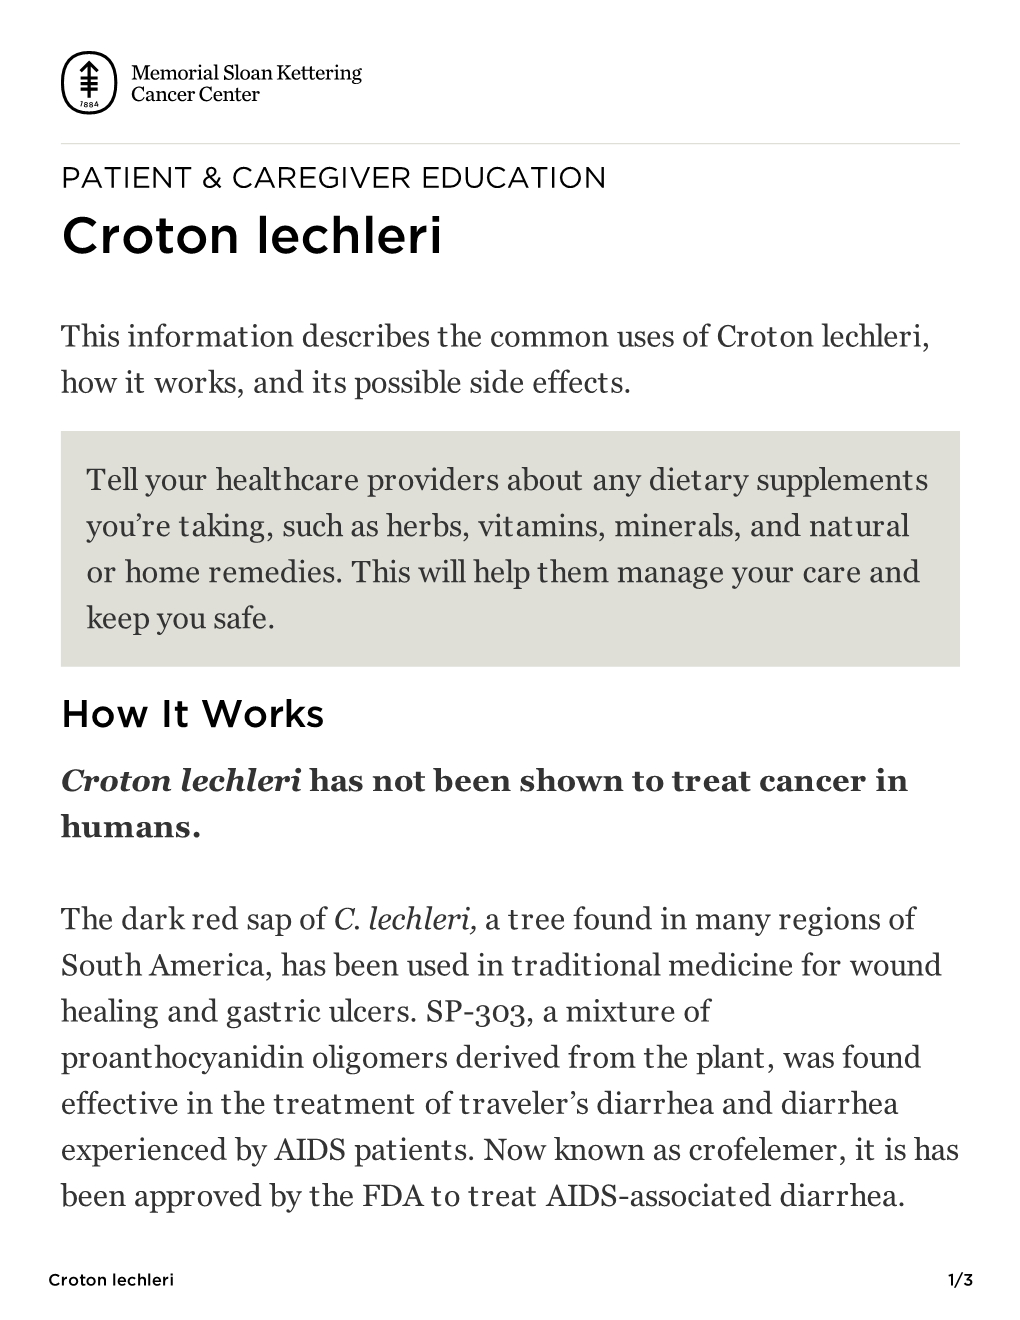 Croton Lechleri